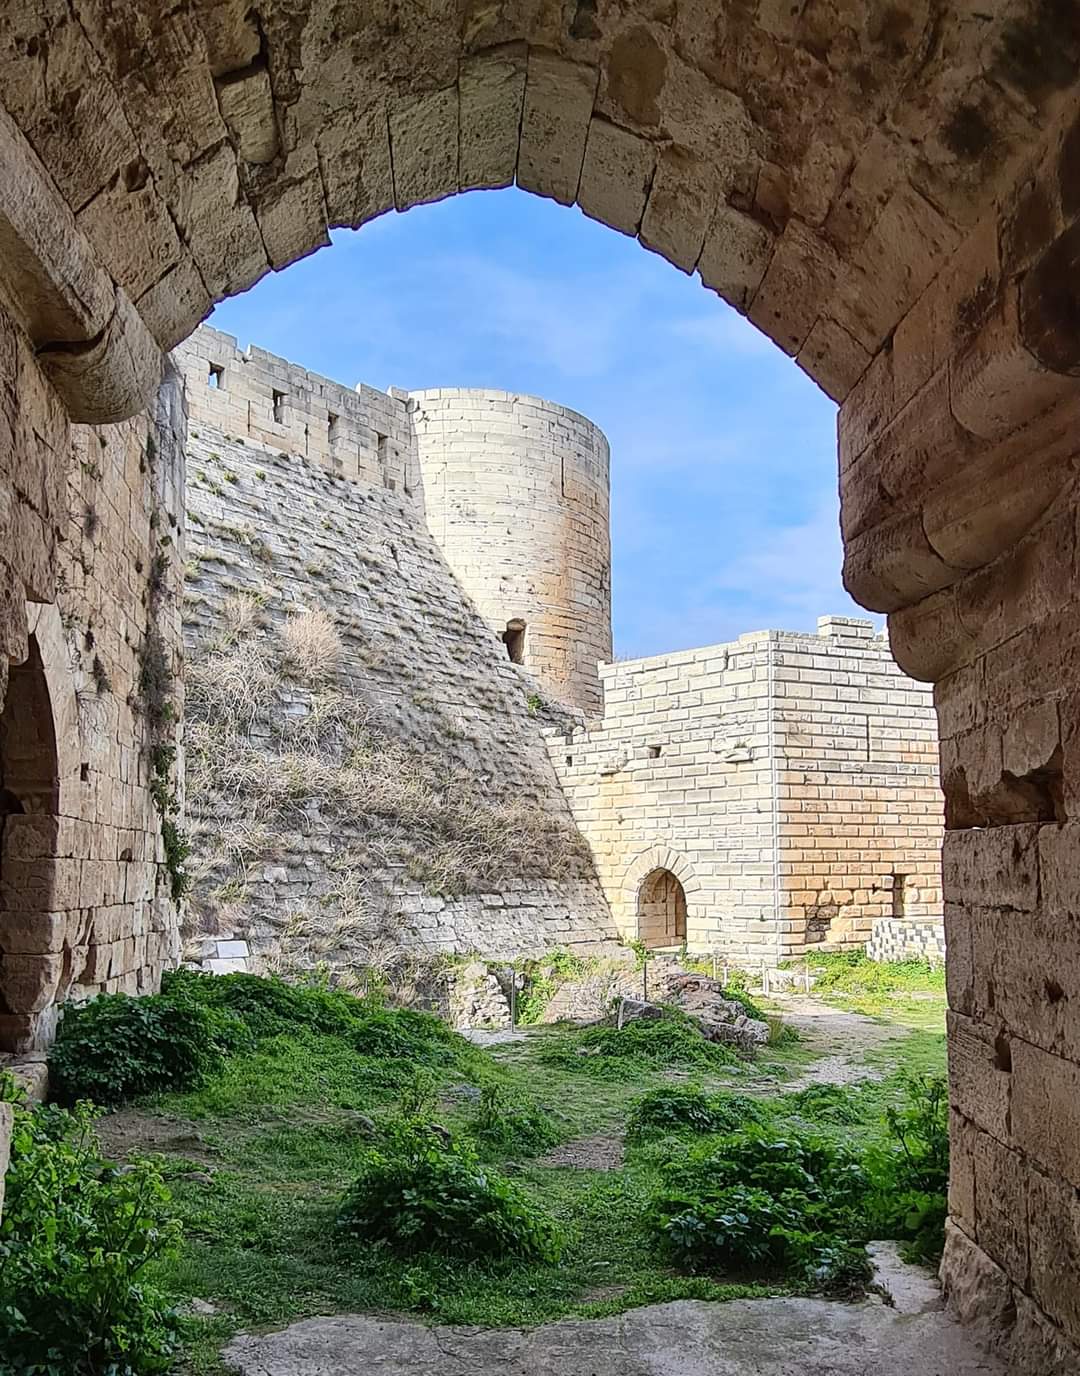 The inner castle of Krak-des-Chevaliers crusader castle